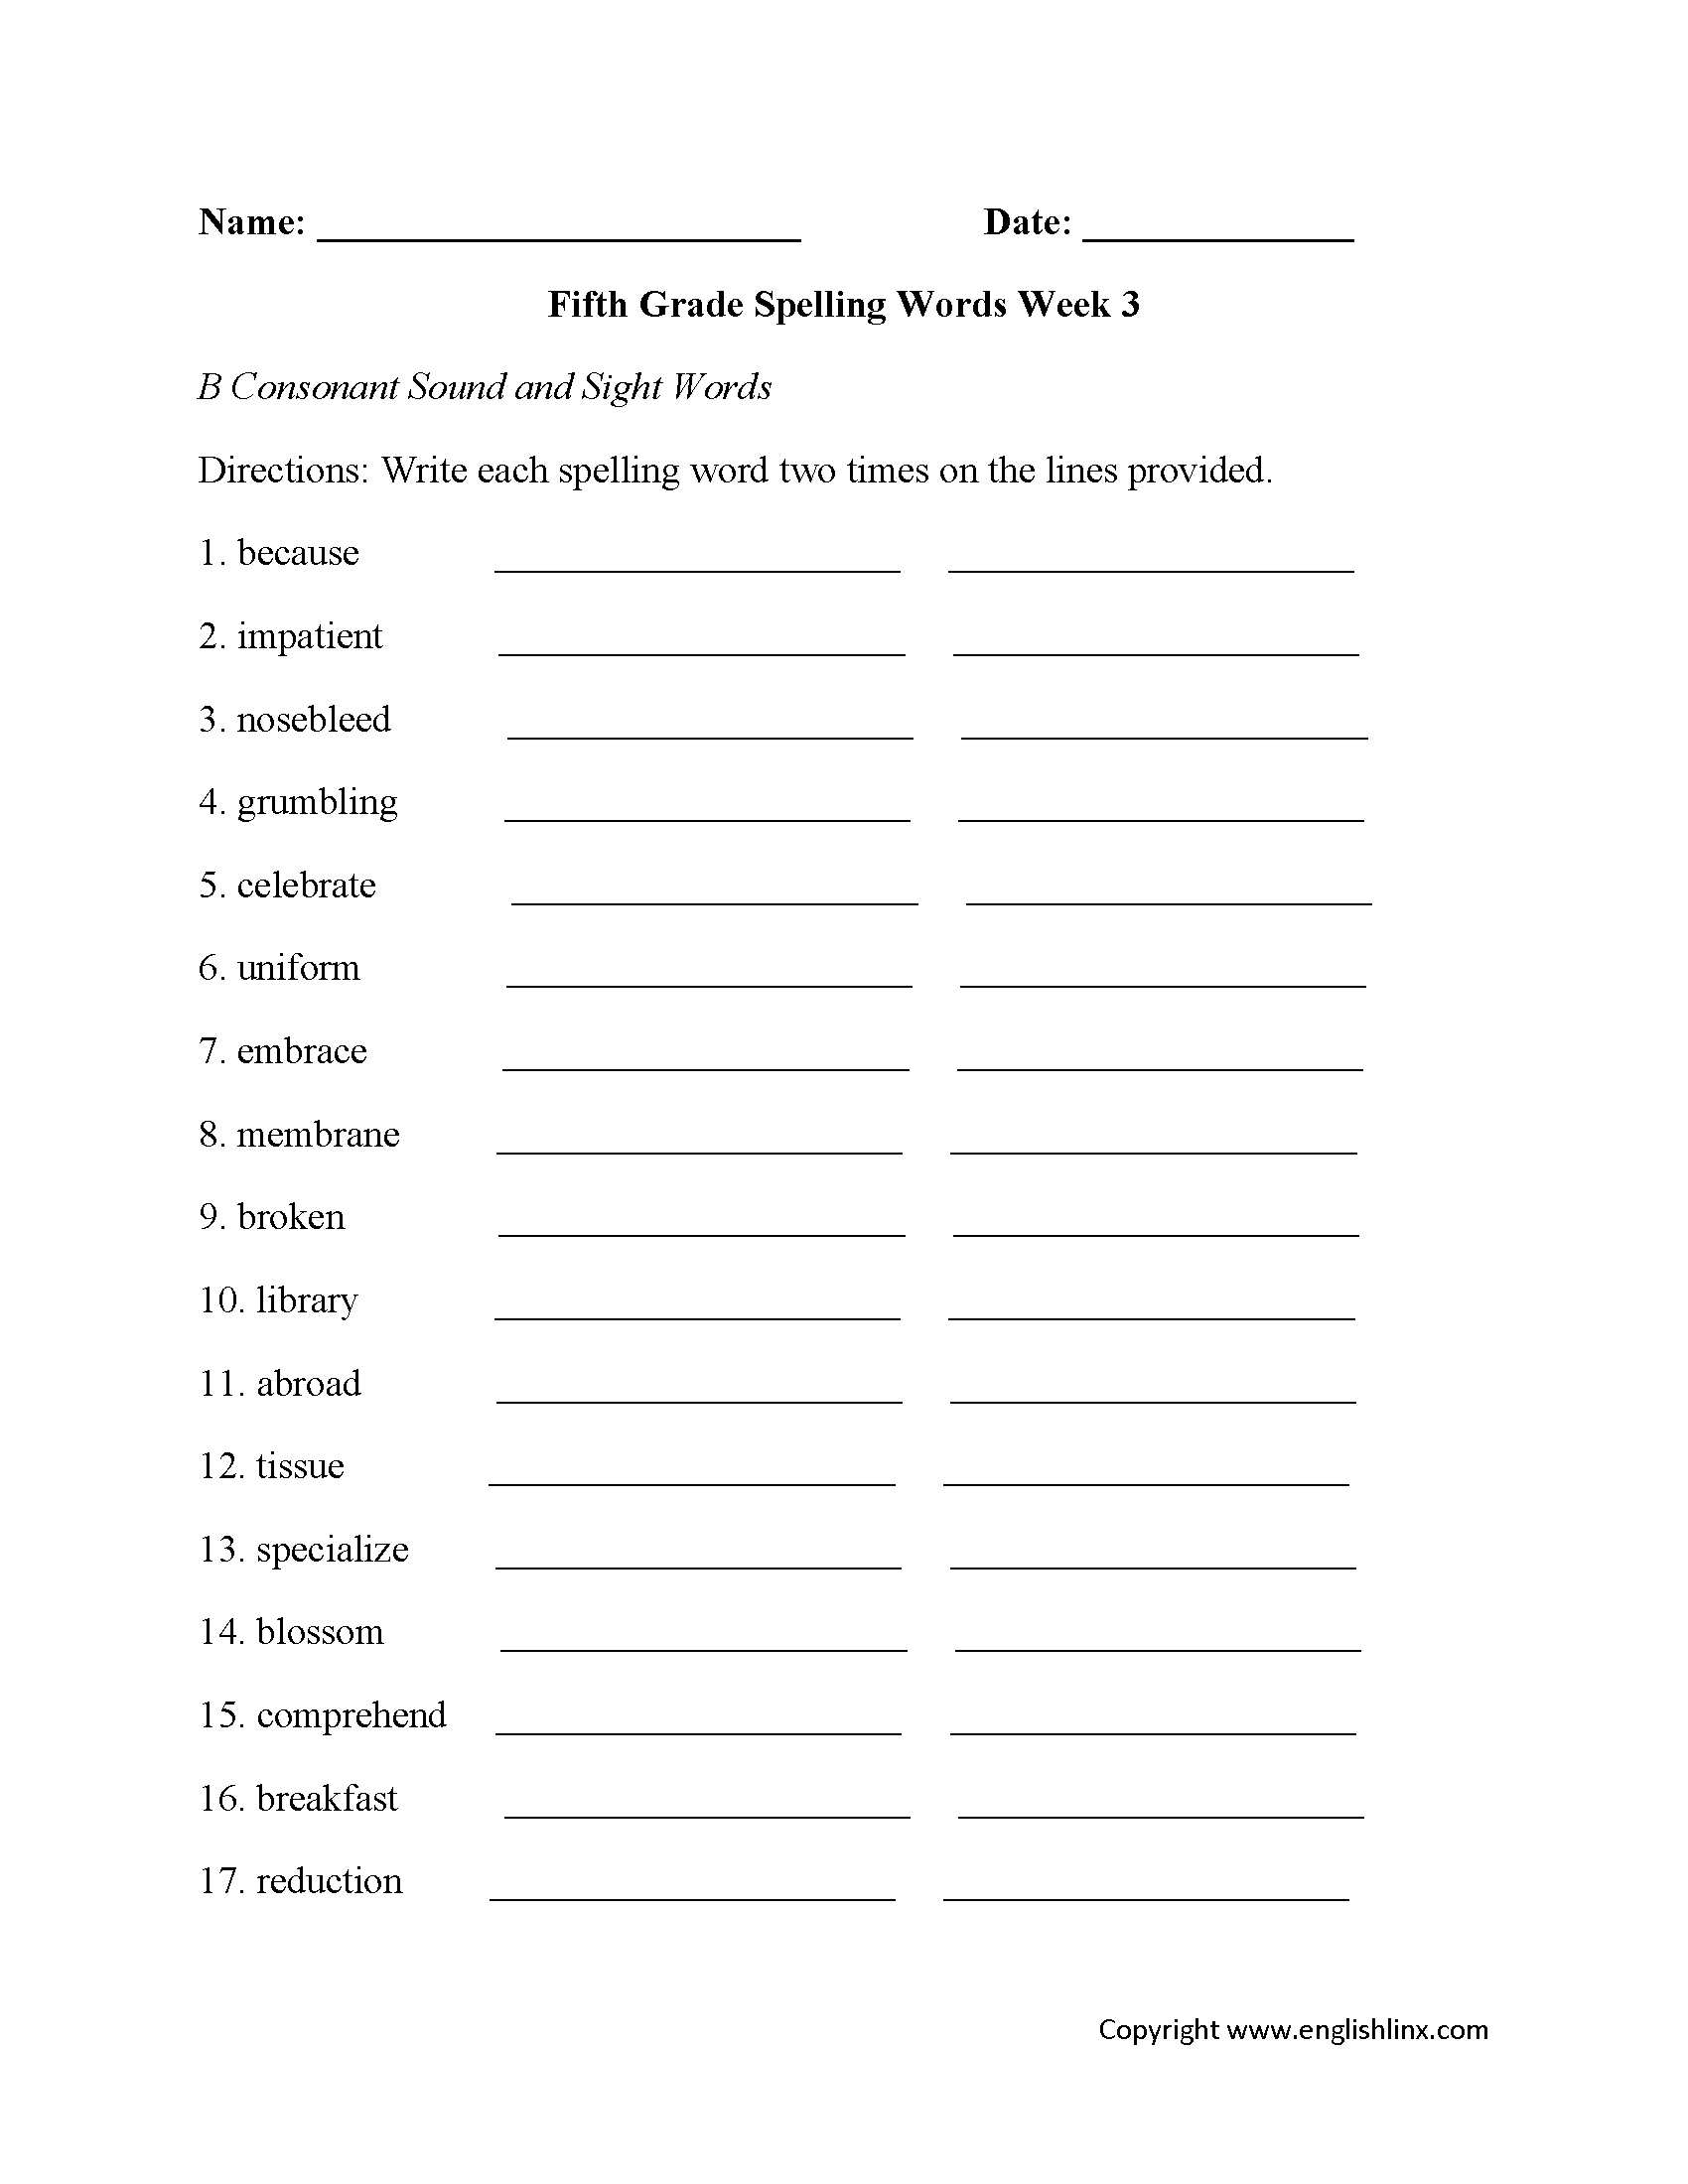 Spelling Worksheets Fifth Grade Spelling Worksheets Db 